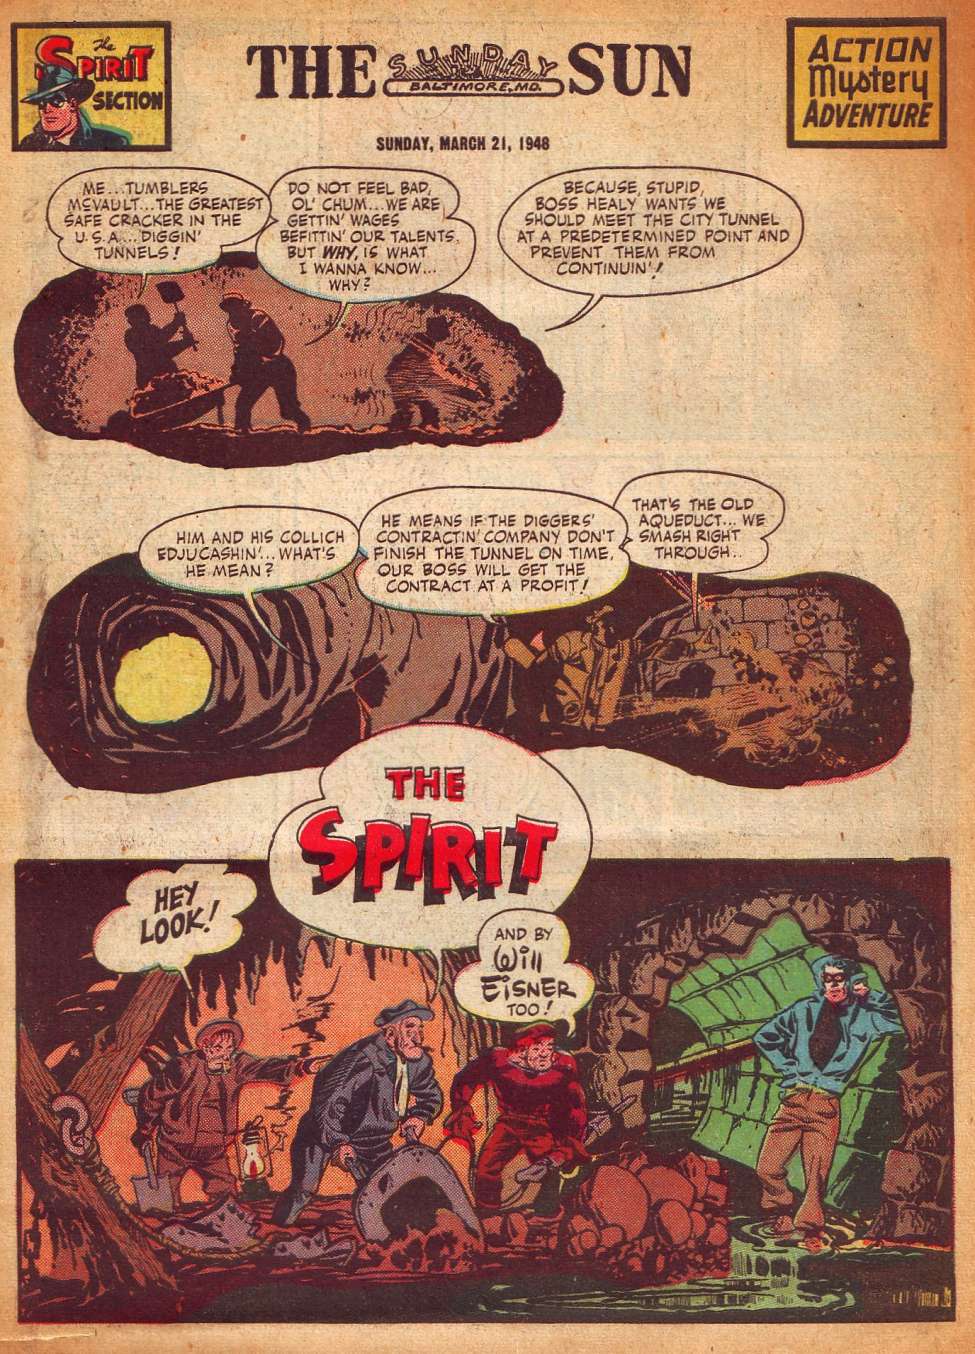 Comic Book Cover For The Spirit (1948-03-21) - Baltimore Sun